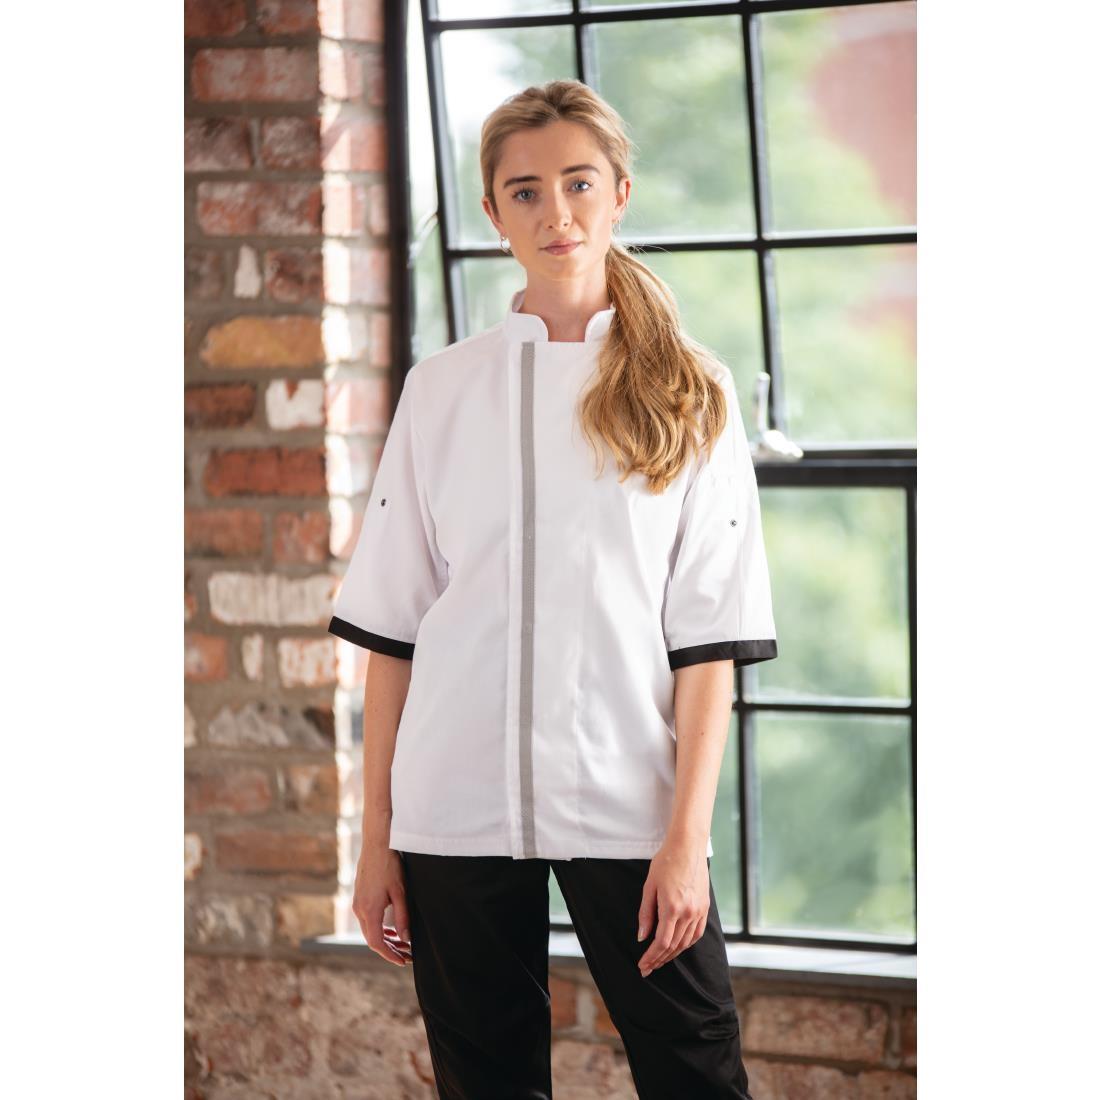 Southside Unisex Chefs Jacket Short Sleeve White XL - B998-XL  - 13